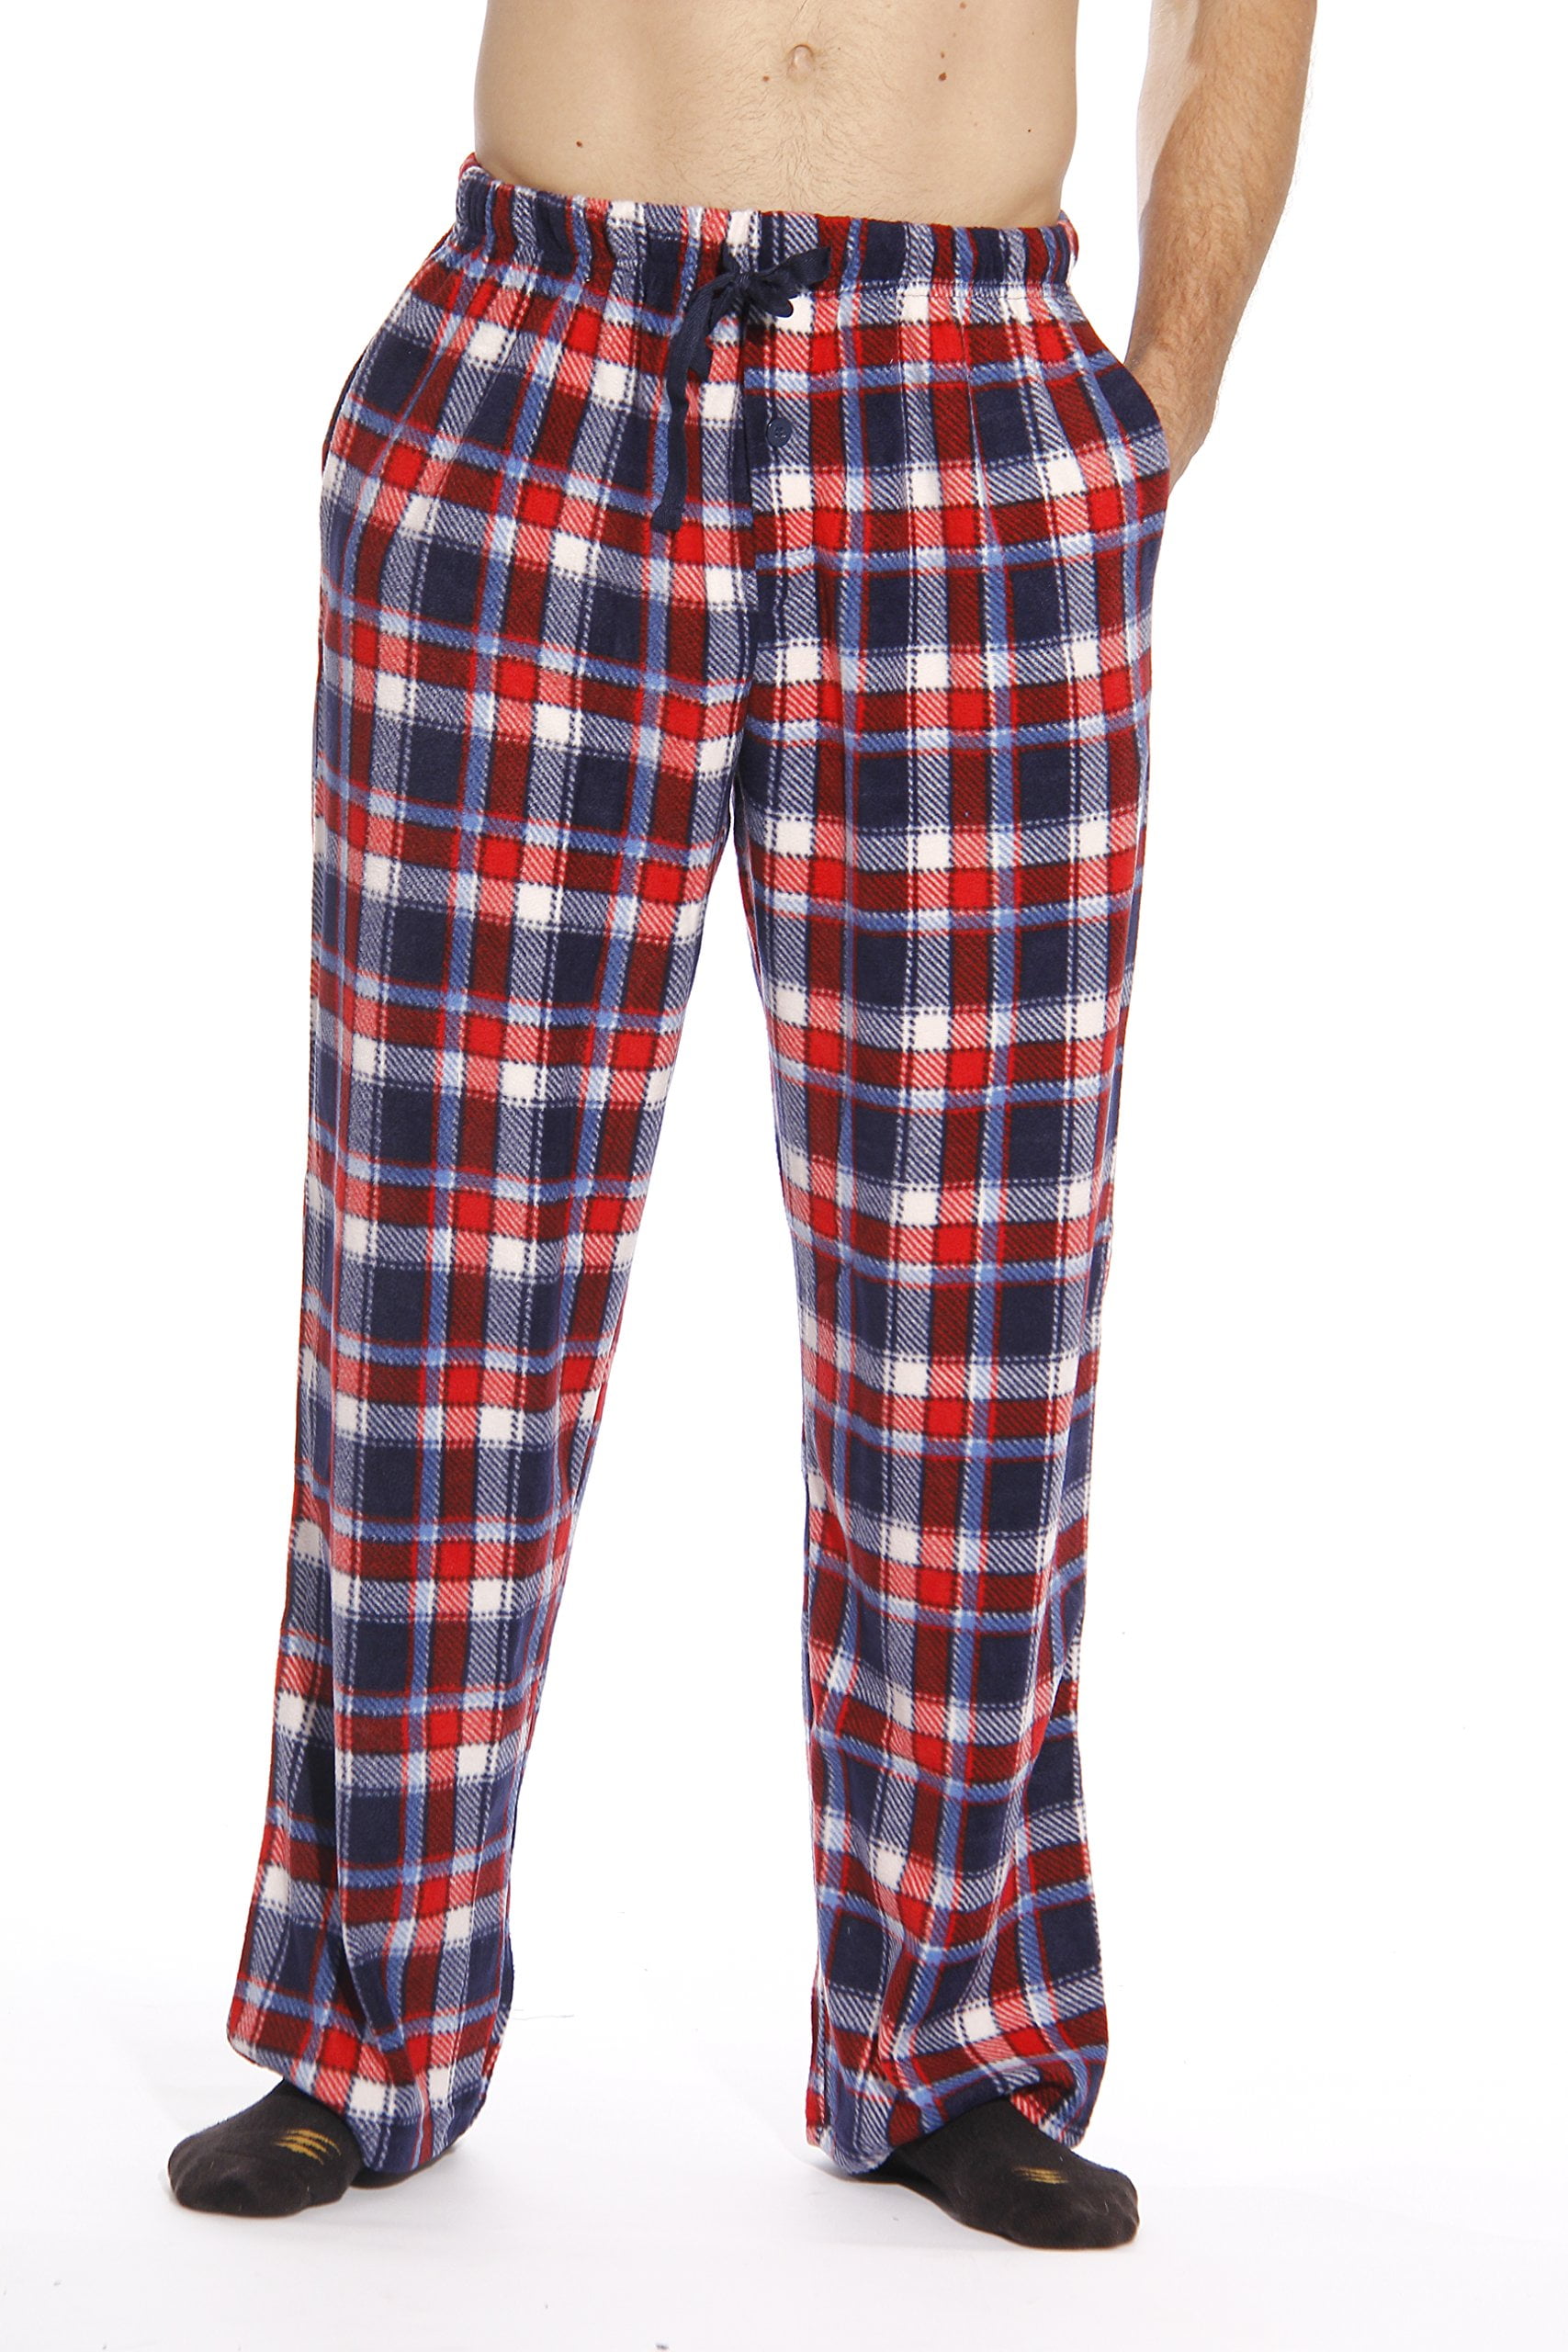 45910-1A-XL #FollowMe Polar Fleece Pajama Pants Set for Men / Sleepwear /  PJs (Medium, Blue Top / Blue Buffalo Plaid Pant) - Just Love Fashion